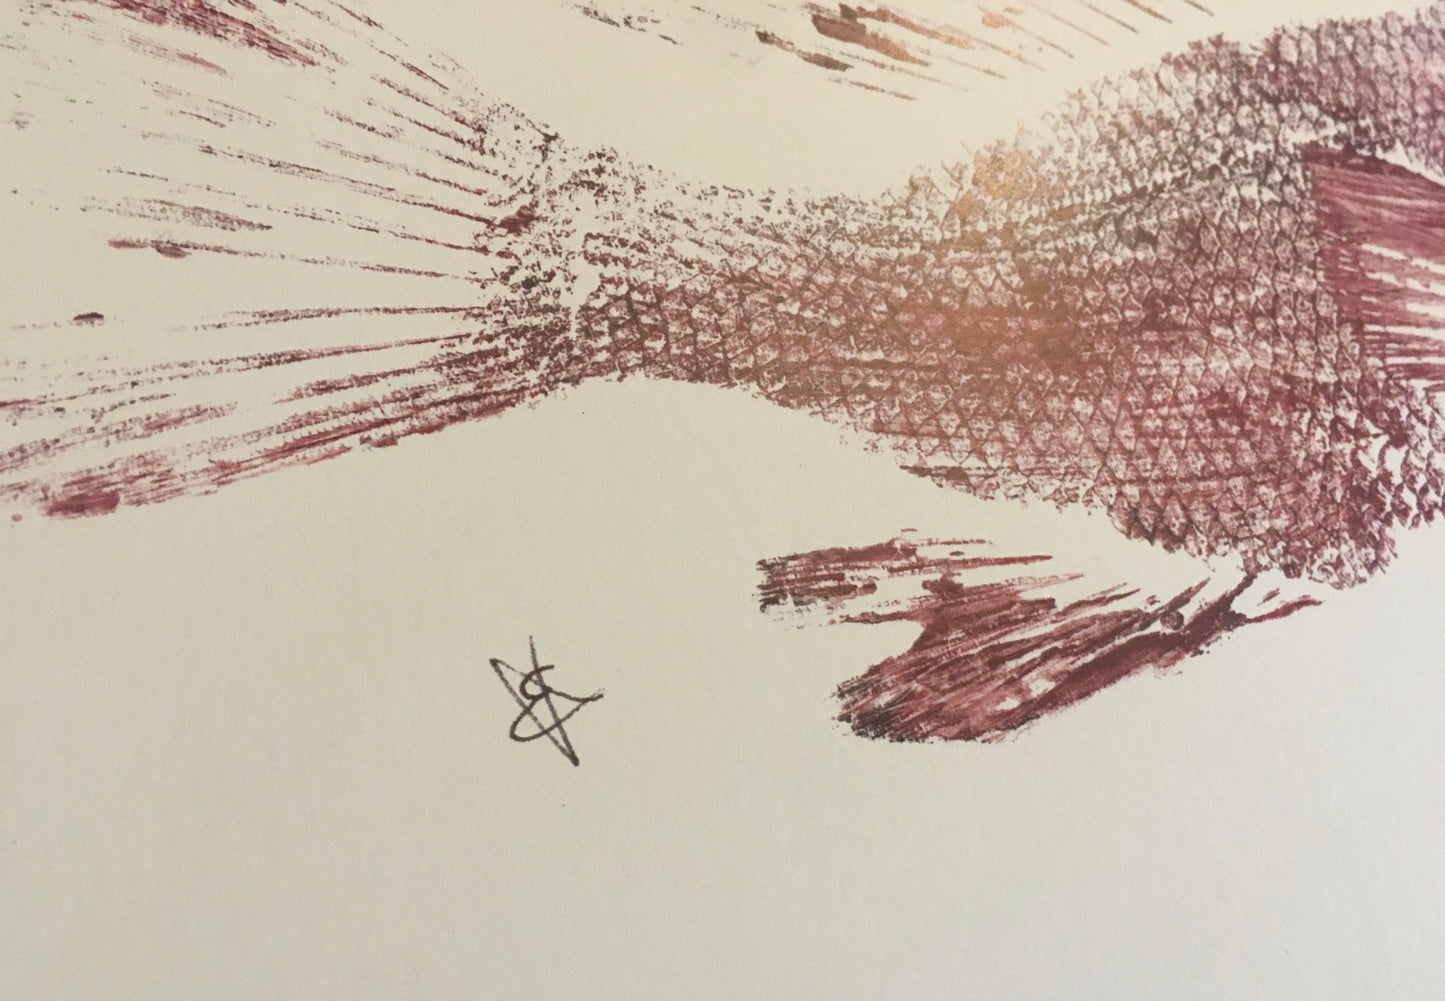 Red Hot Fish Print - 11x17”